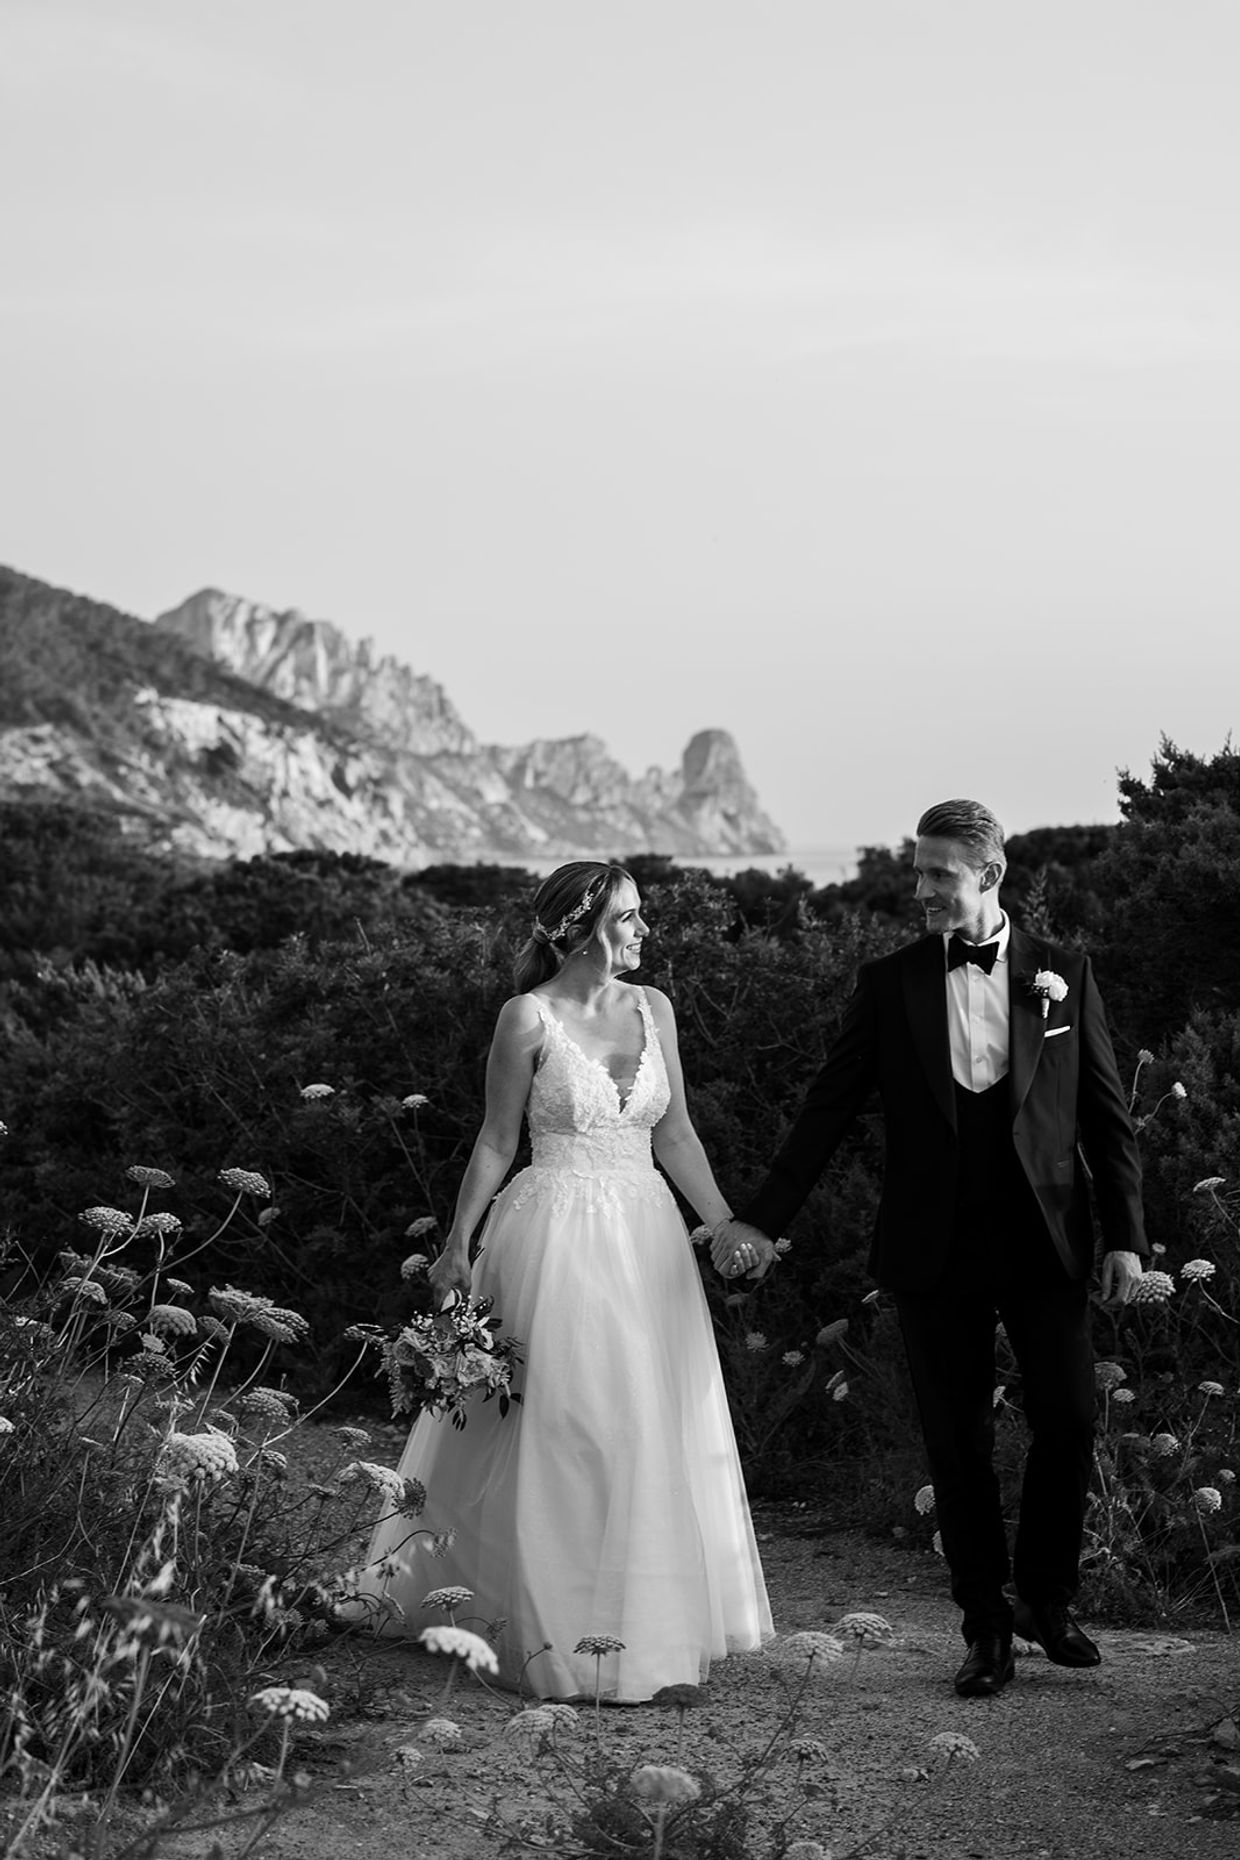 Why Ibiza is a Top Wedding Destination